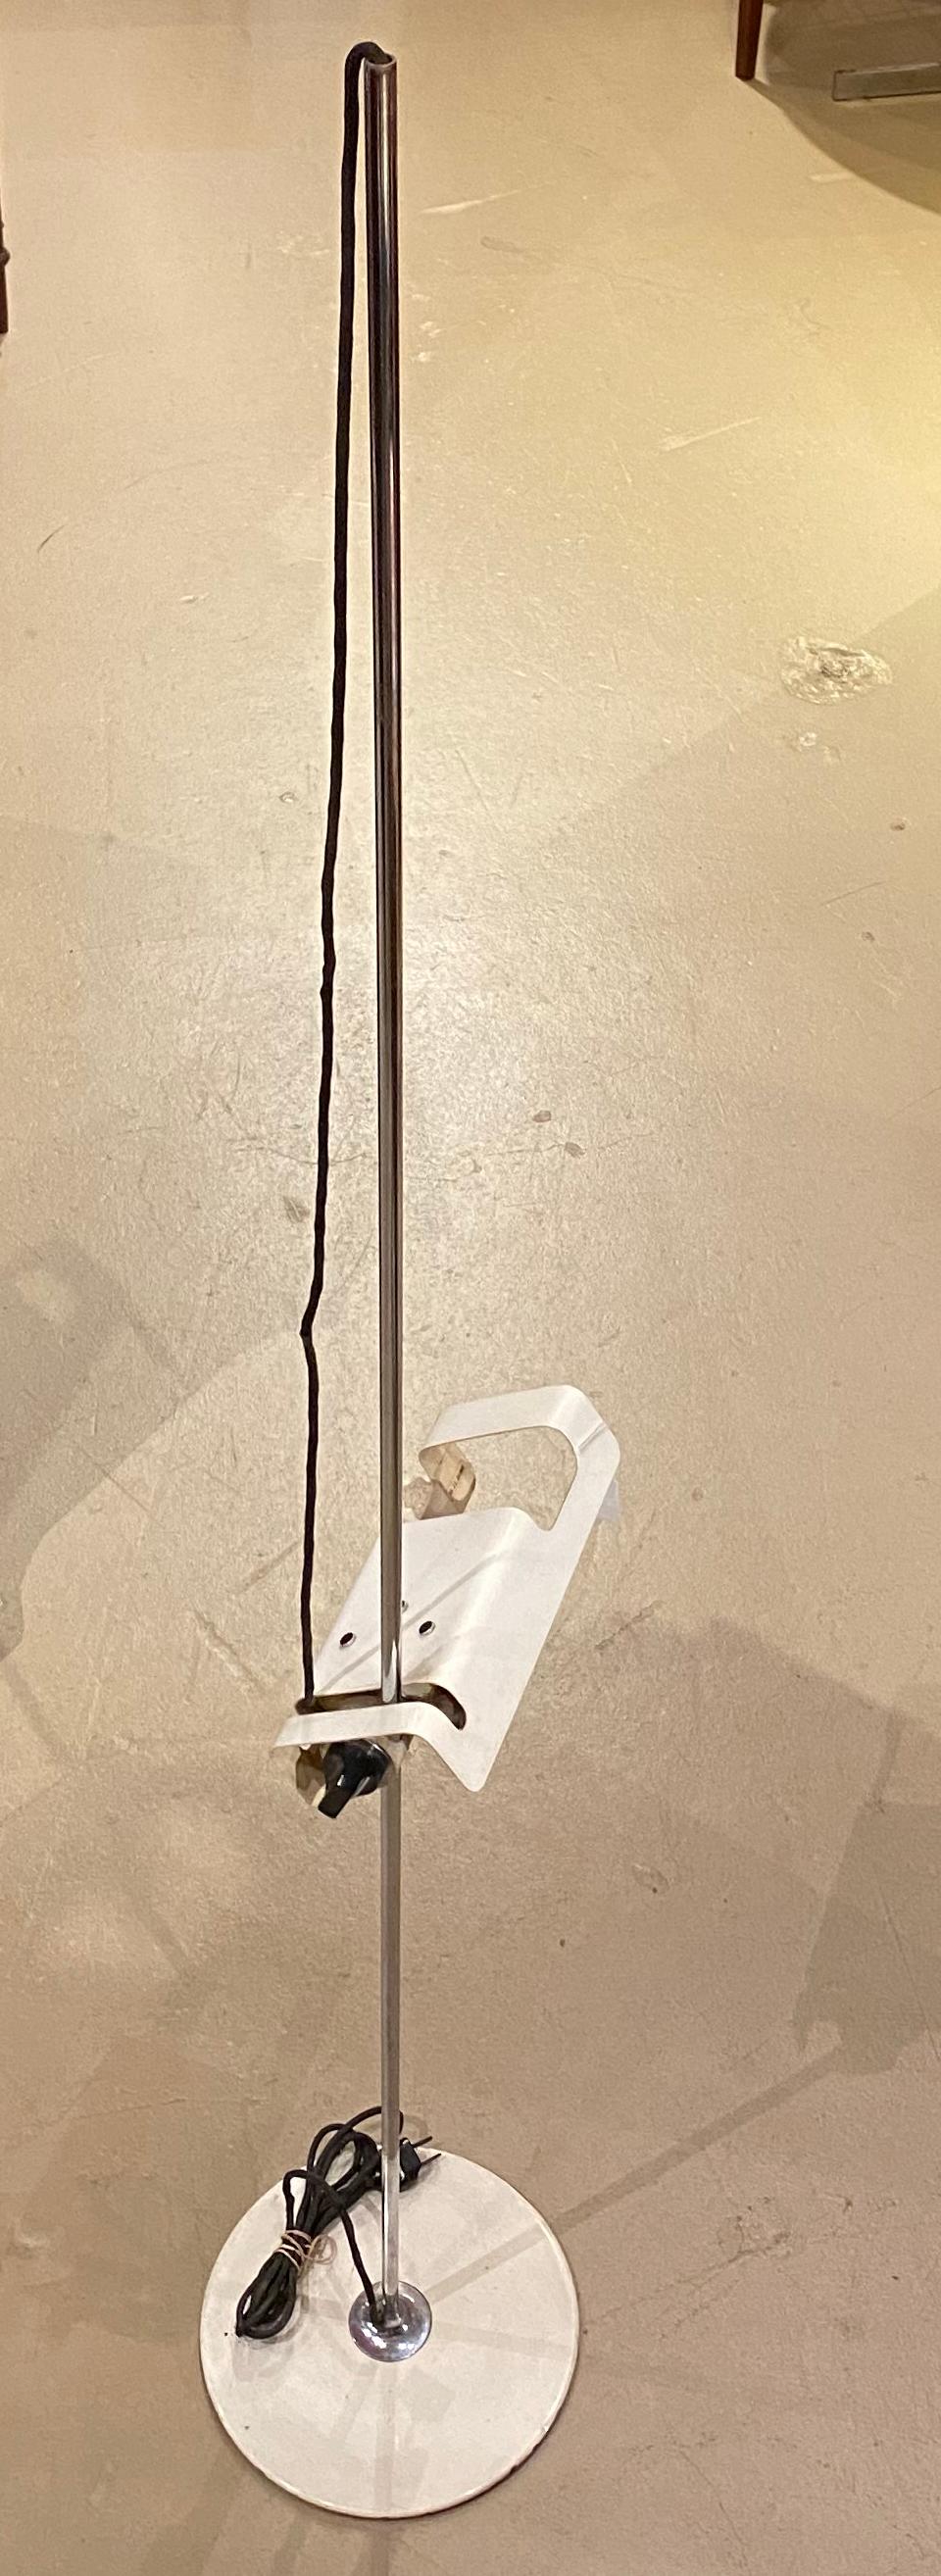 Joe Colombo Mid Century Adjustable Metal Spider Floor Lamp in White for Oluce For Sale 2